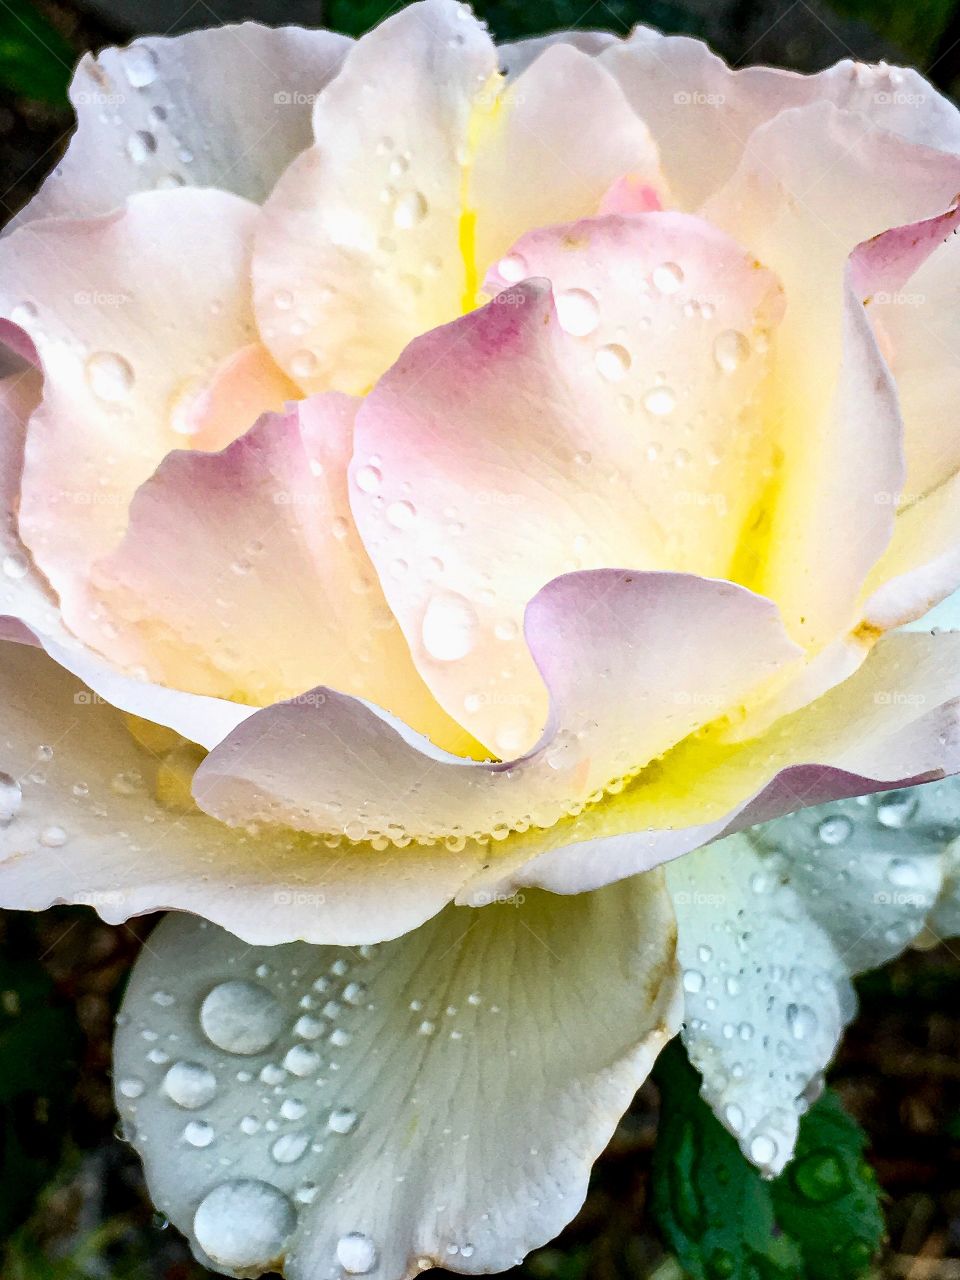 Raindrops on Roses